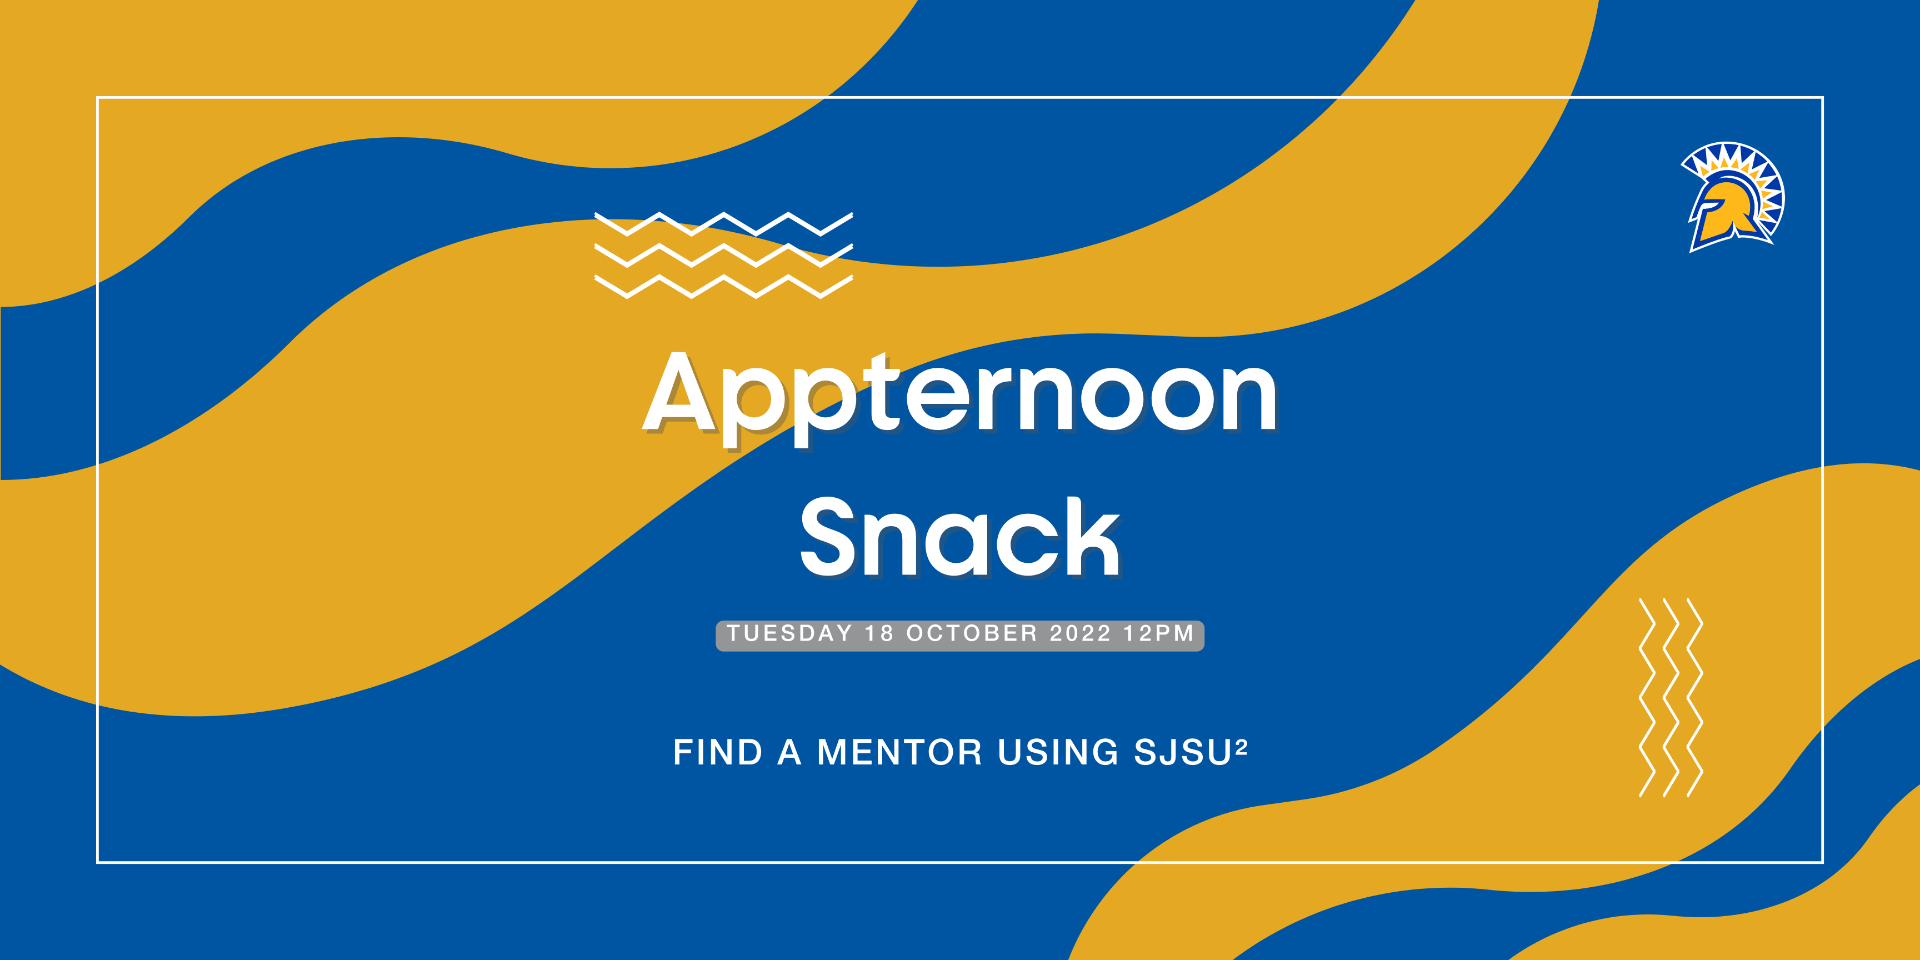 SJSU Career Center Event - Find a Mentor using SJSU², Appternoon Snack